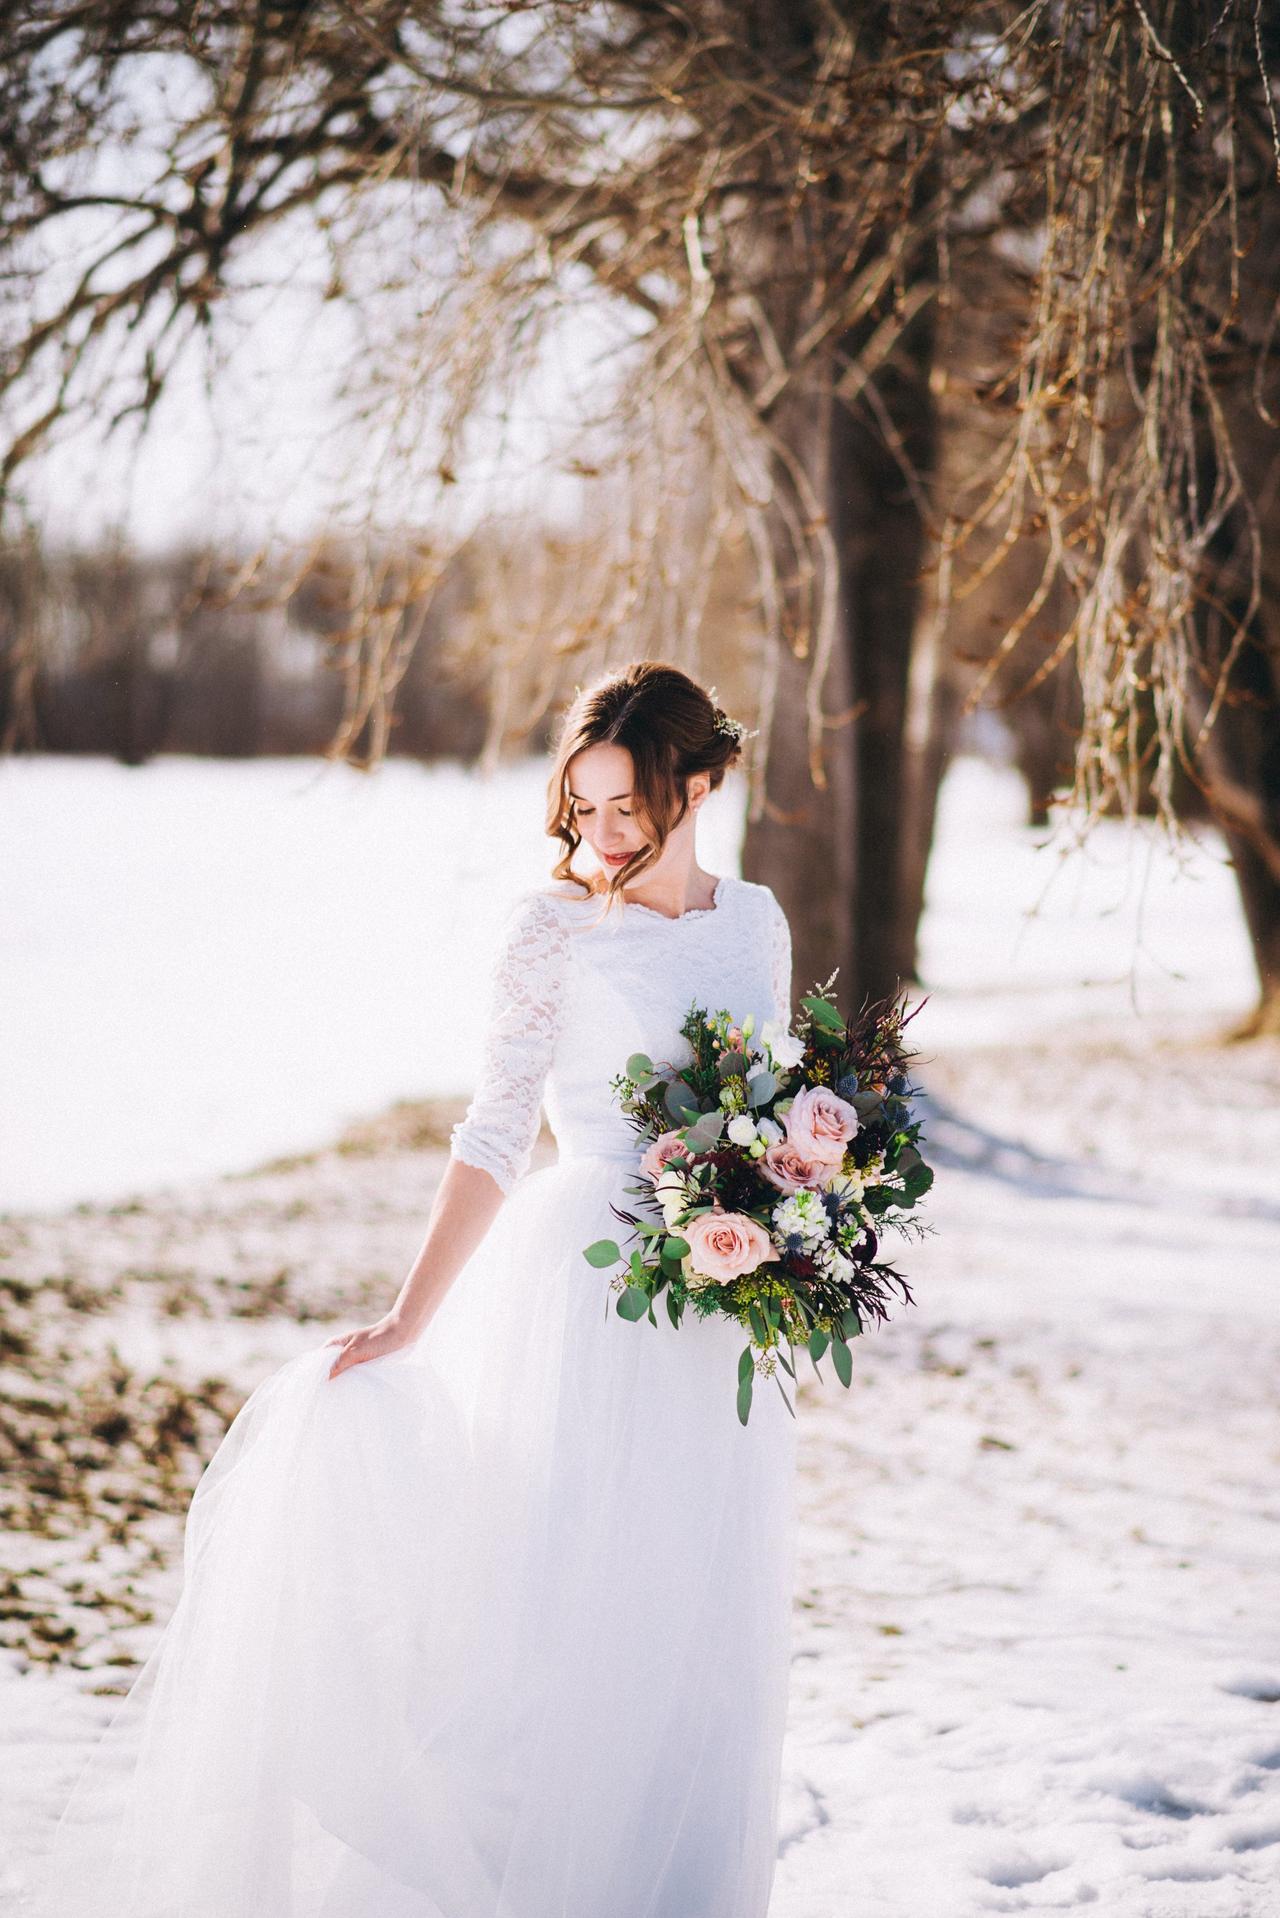 30 Trendy Winter Wedding Dresses To Get Inspired - Weddingomania